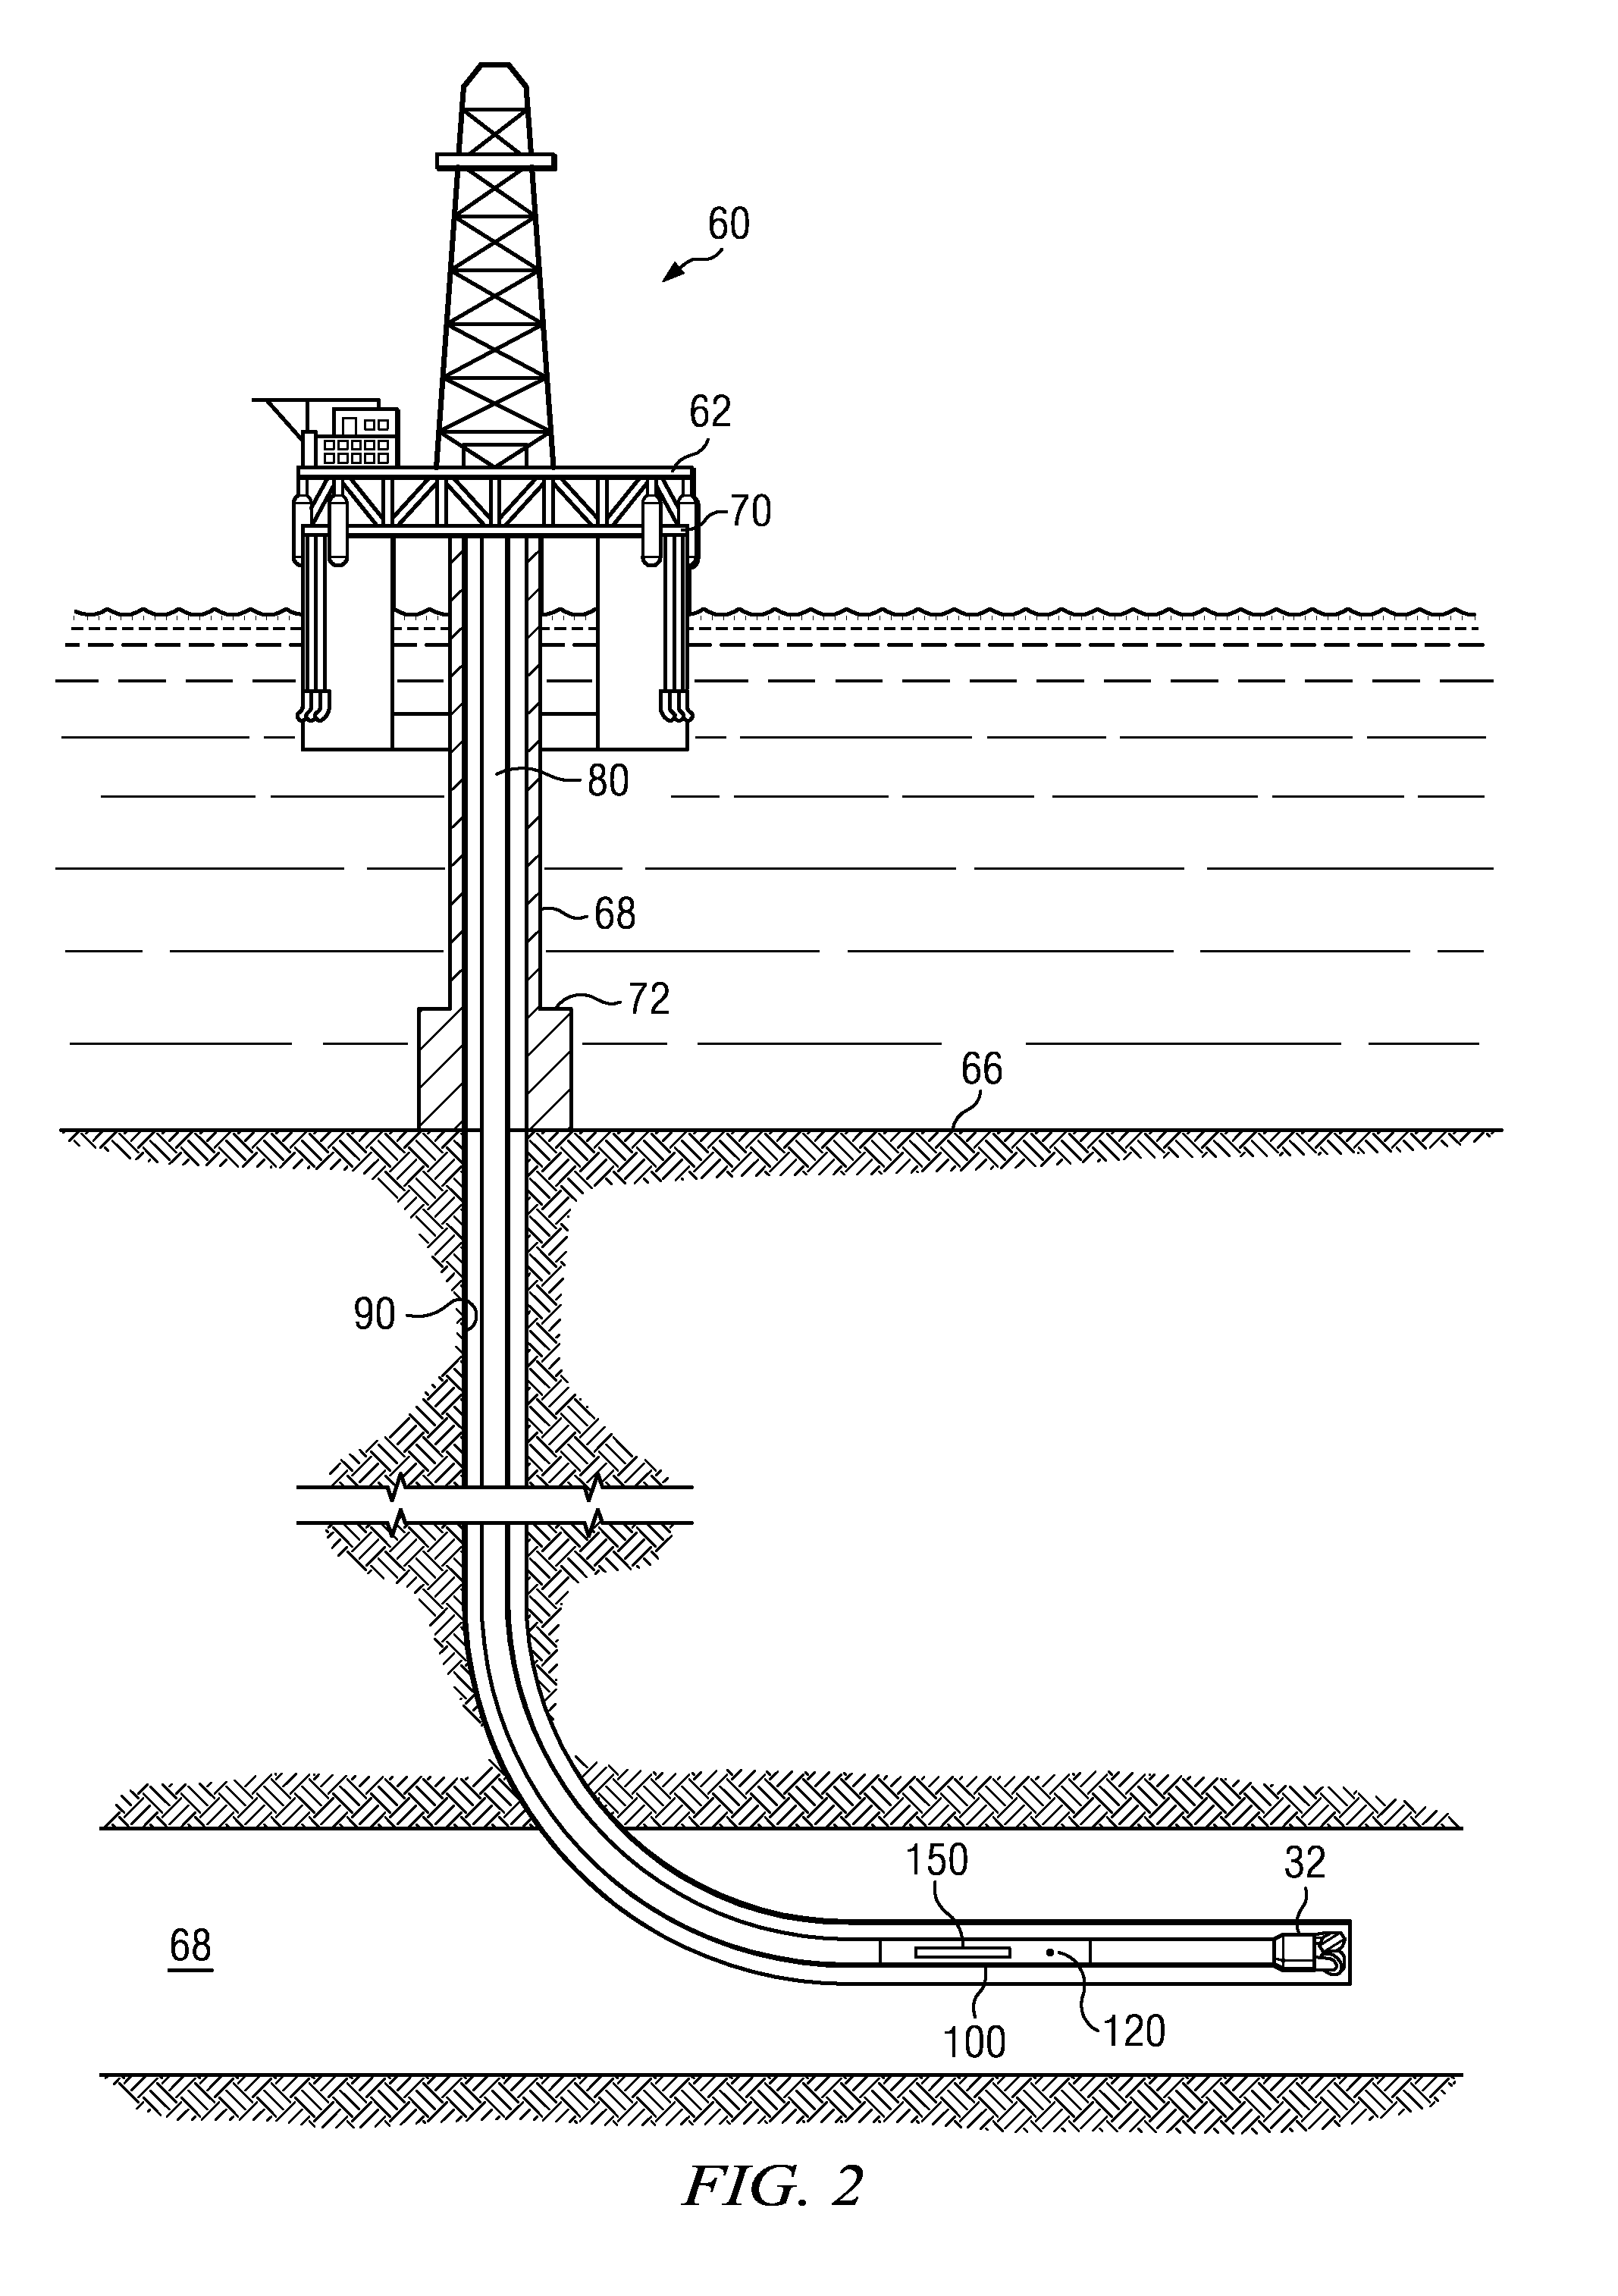 Method and Apparatus for Neutron Logging Using a Position Sensitive Neutron Detector